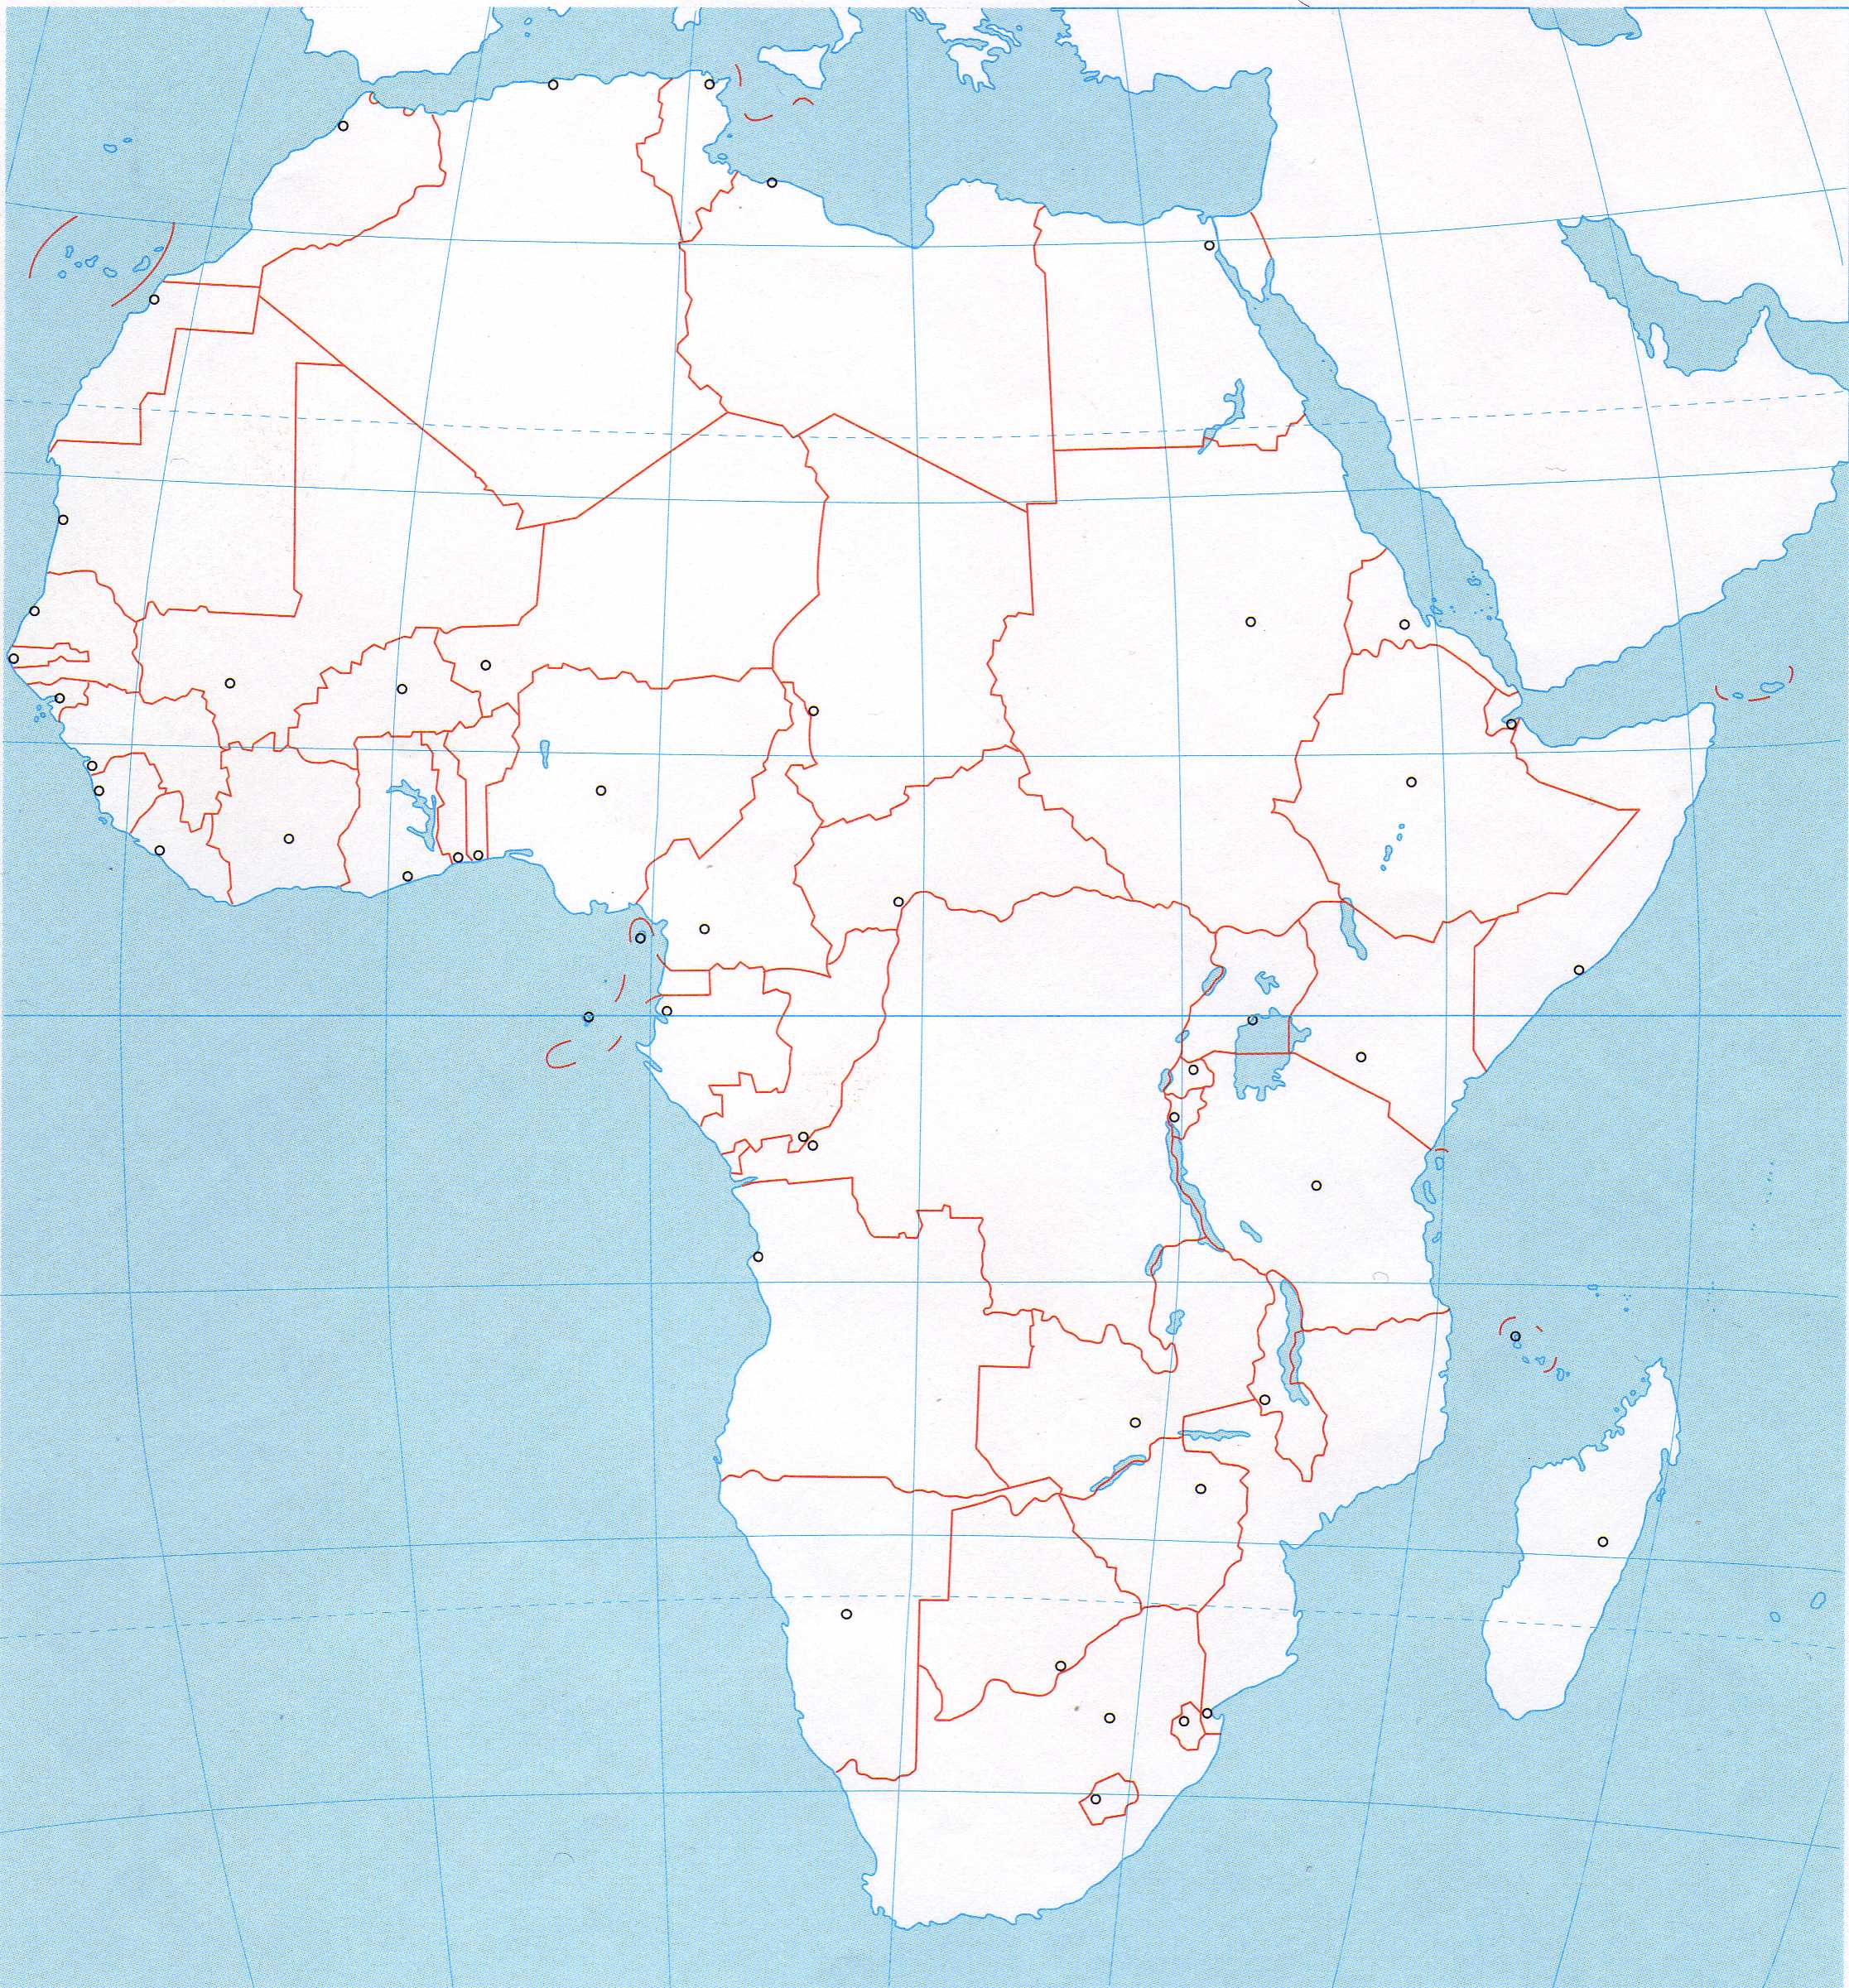 Nema Karta Afrike | superjoden